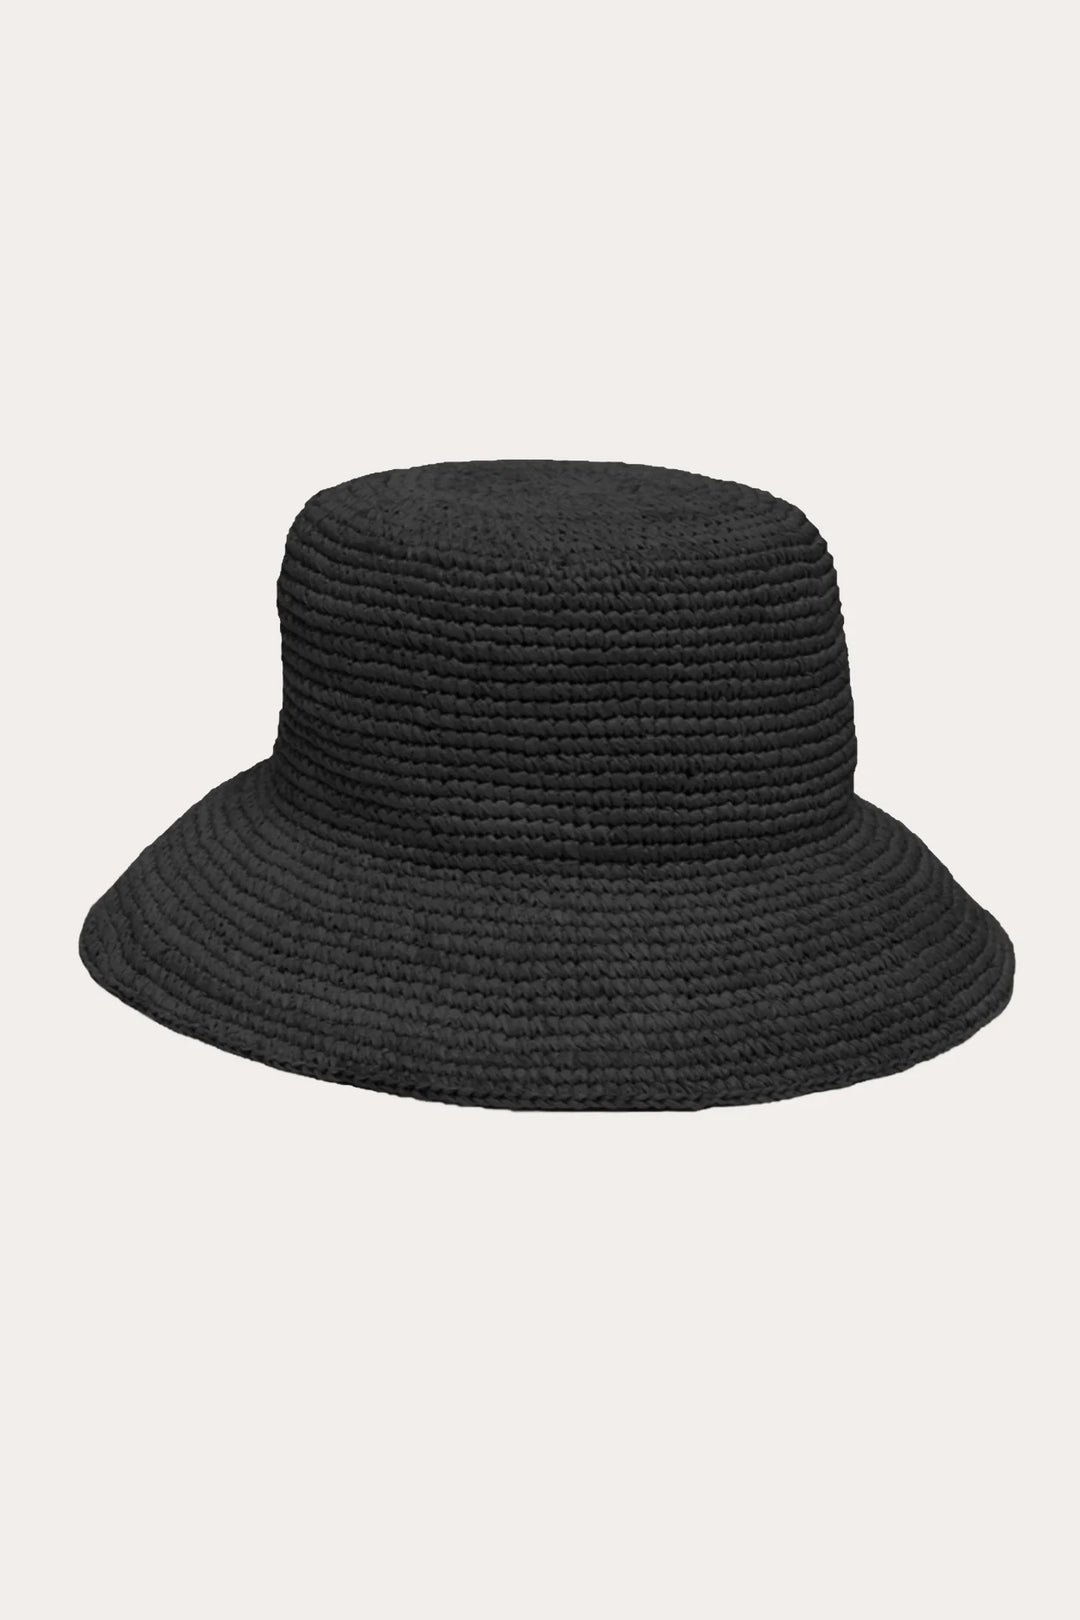 CANNES STRAW BUCKET HAT